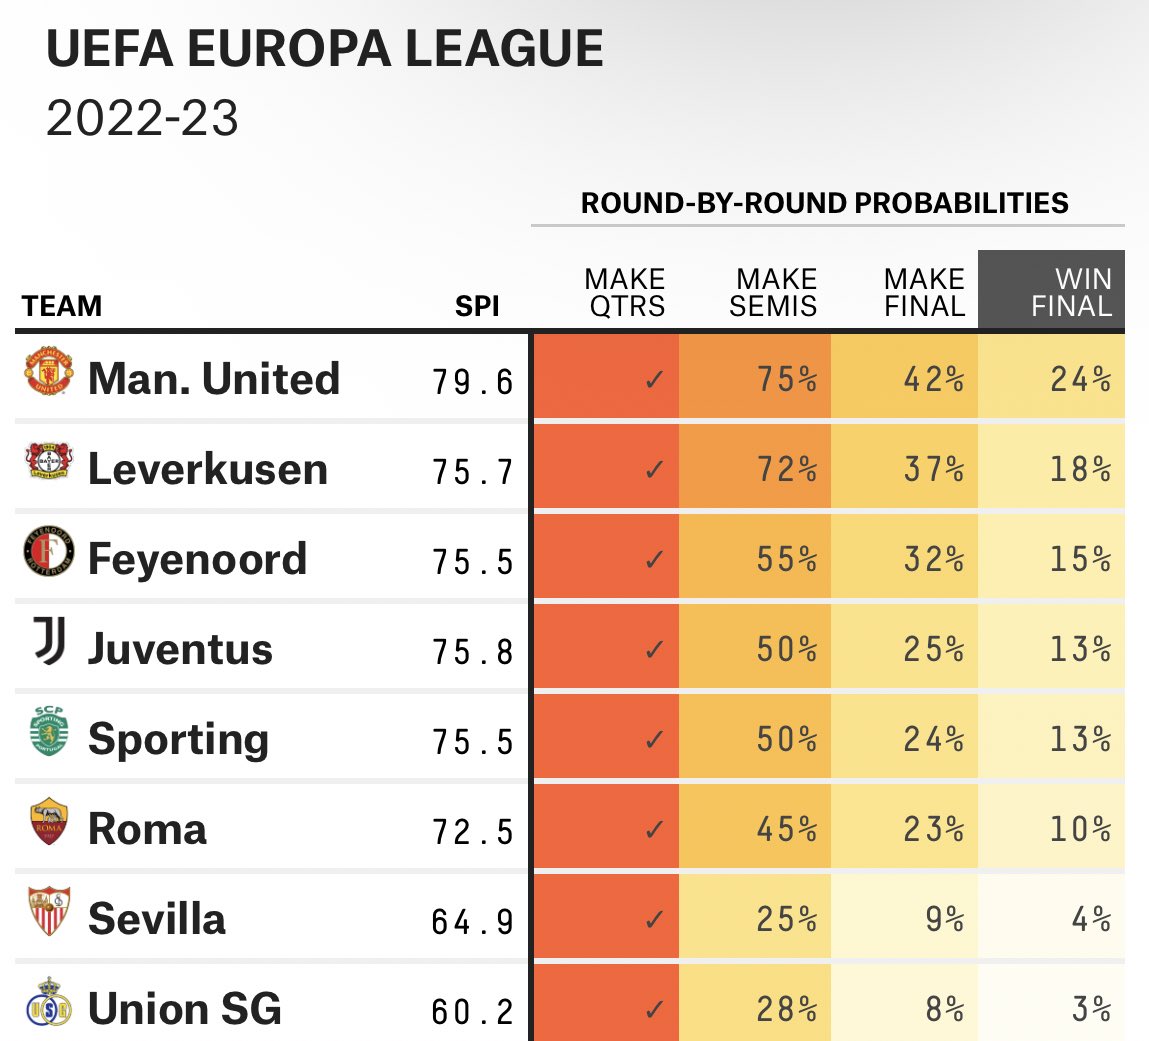 europa league odds